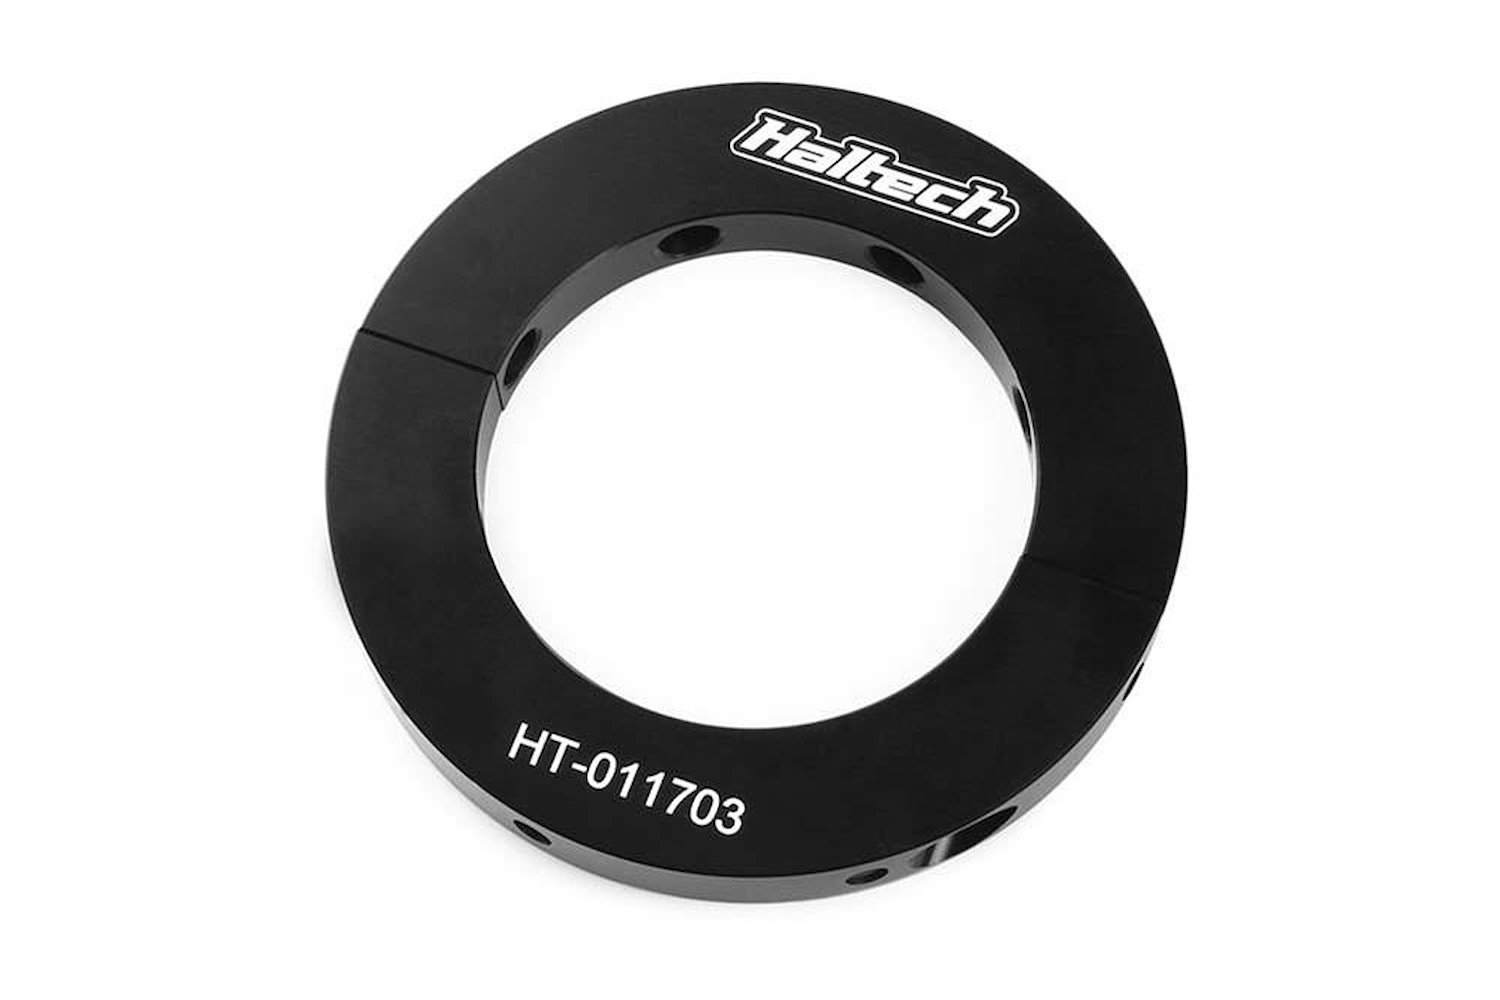 HT-011703 Driveshaft Split Collar, 2.187 in. / 55.55 mm I.D., 8 Magnet